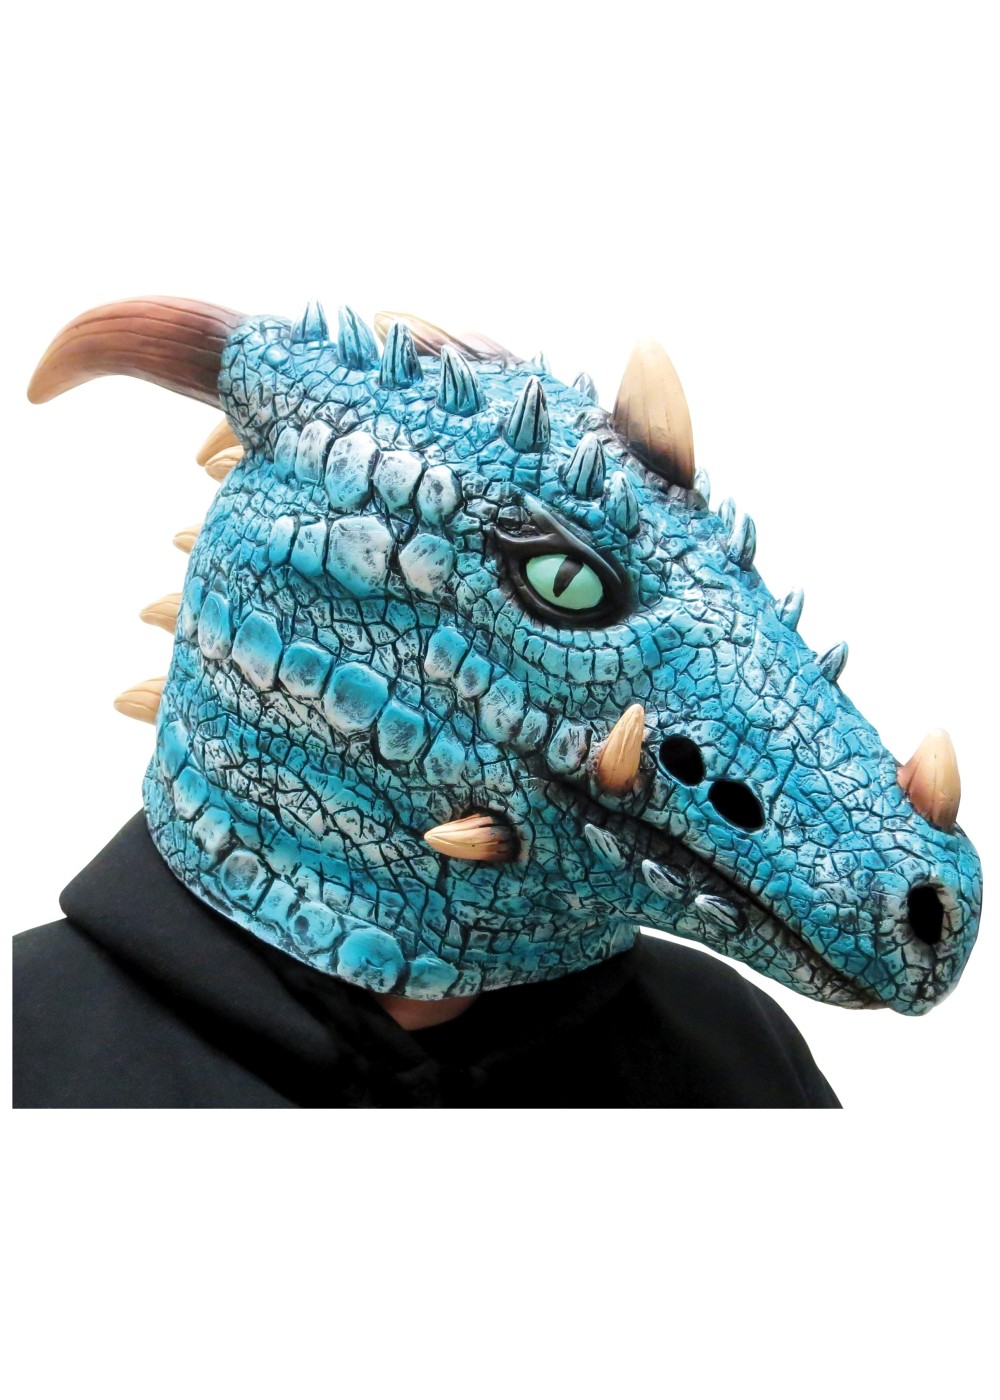 Blue Dragon Mask